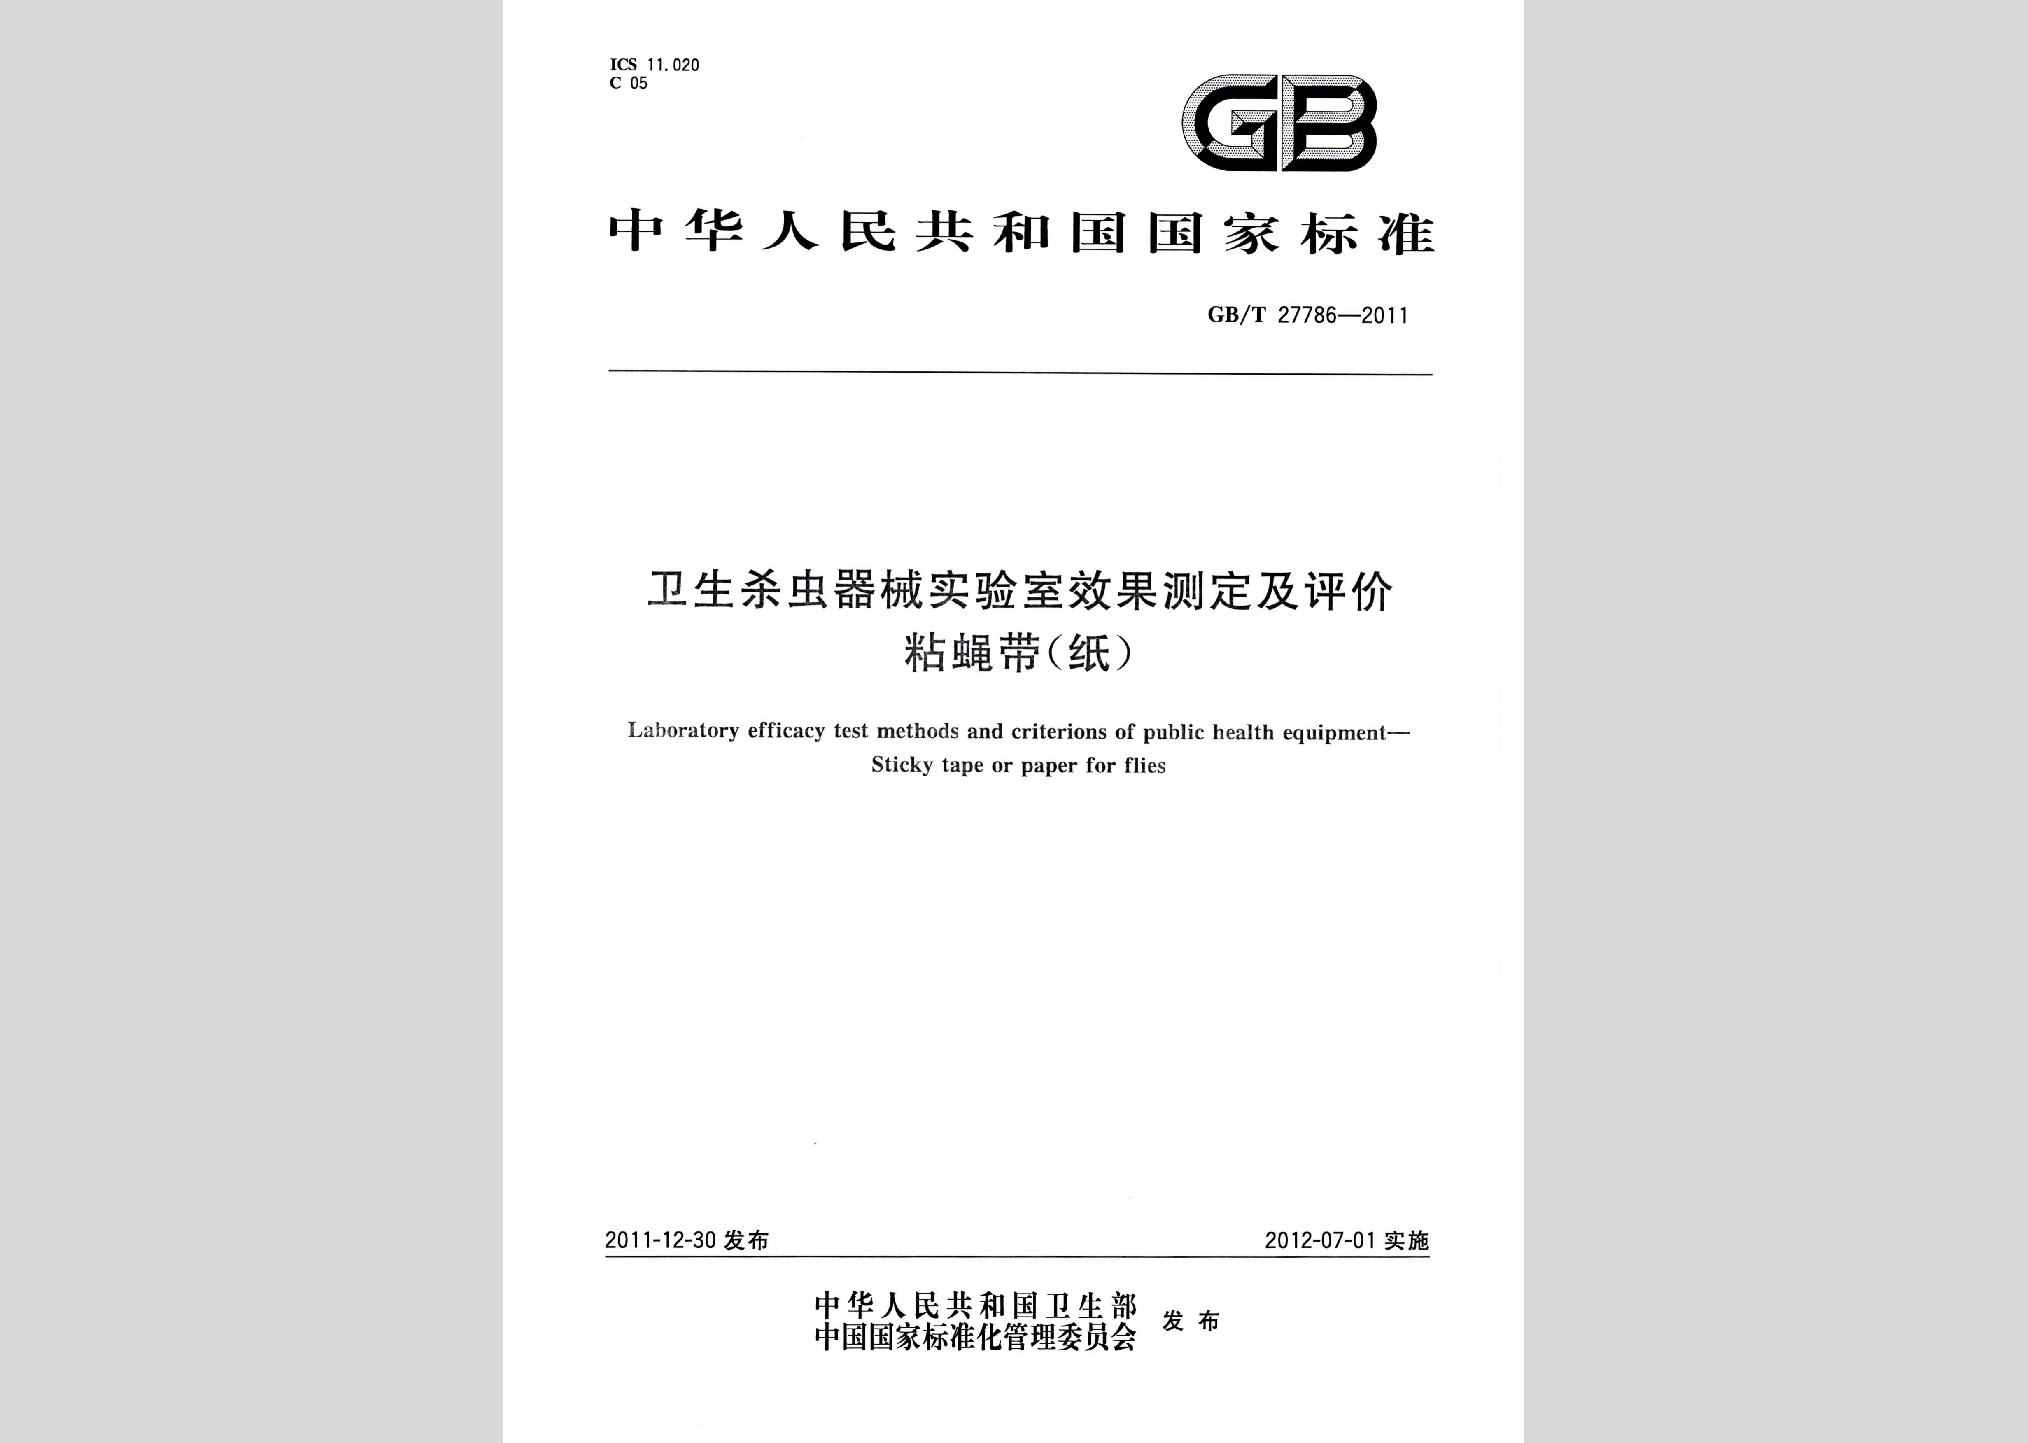 GB/T27786-2011：卫生杀虫器械实验室效果测定及评价粘蝇带（纸）